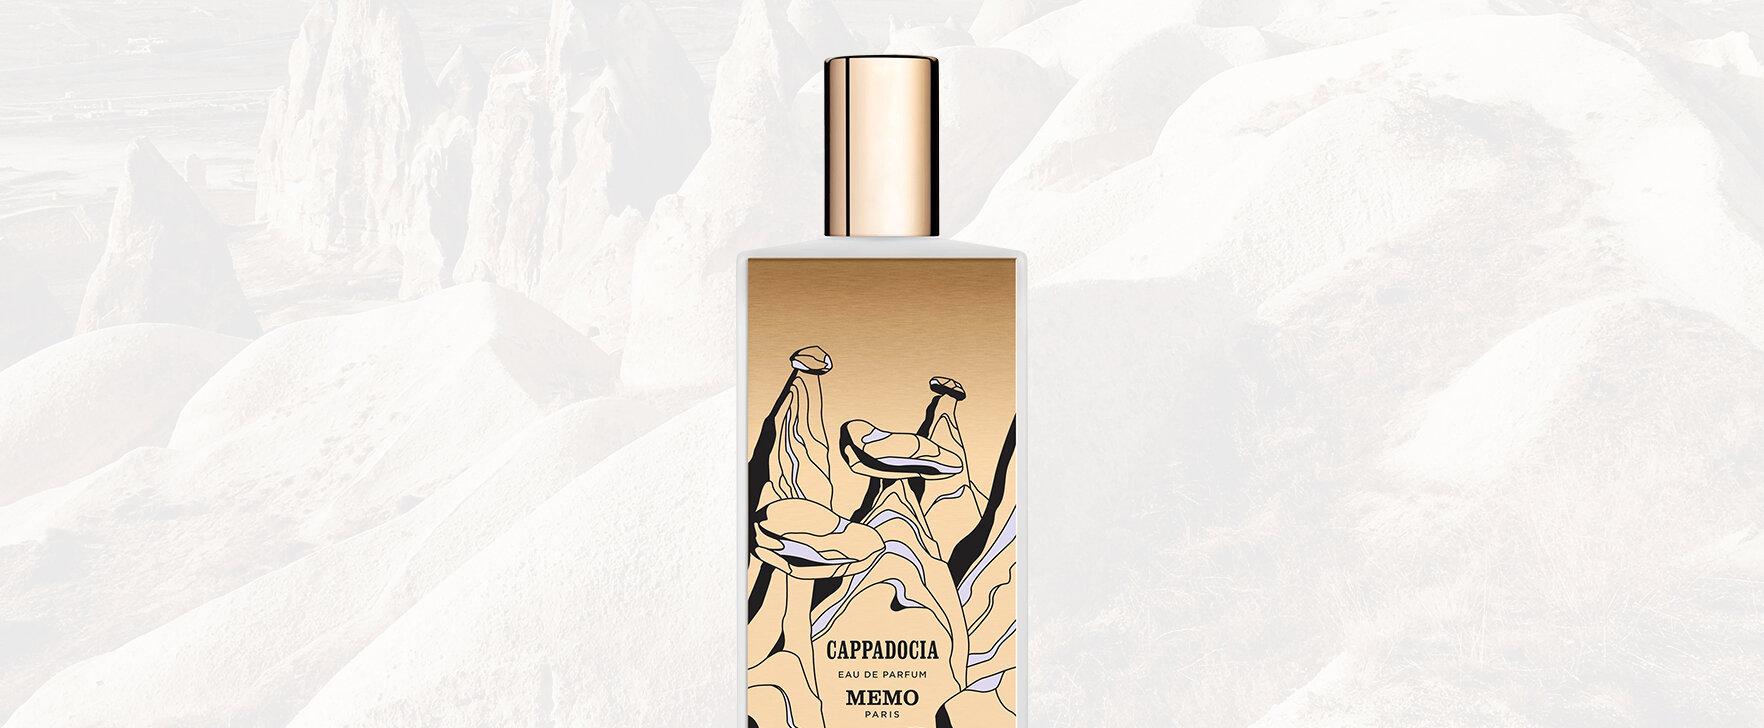 A Fragrance Journey Through Cappadocia: The New Eau de Parfum "Cappadocia" From Memo Paris